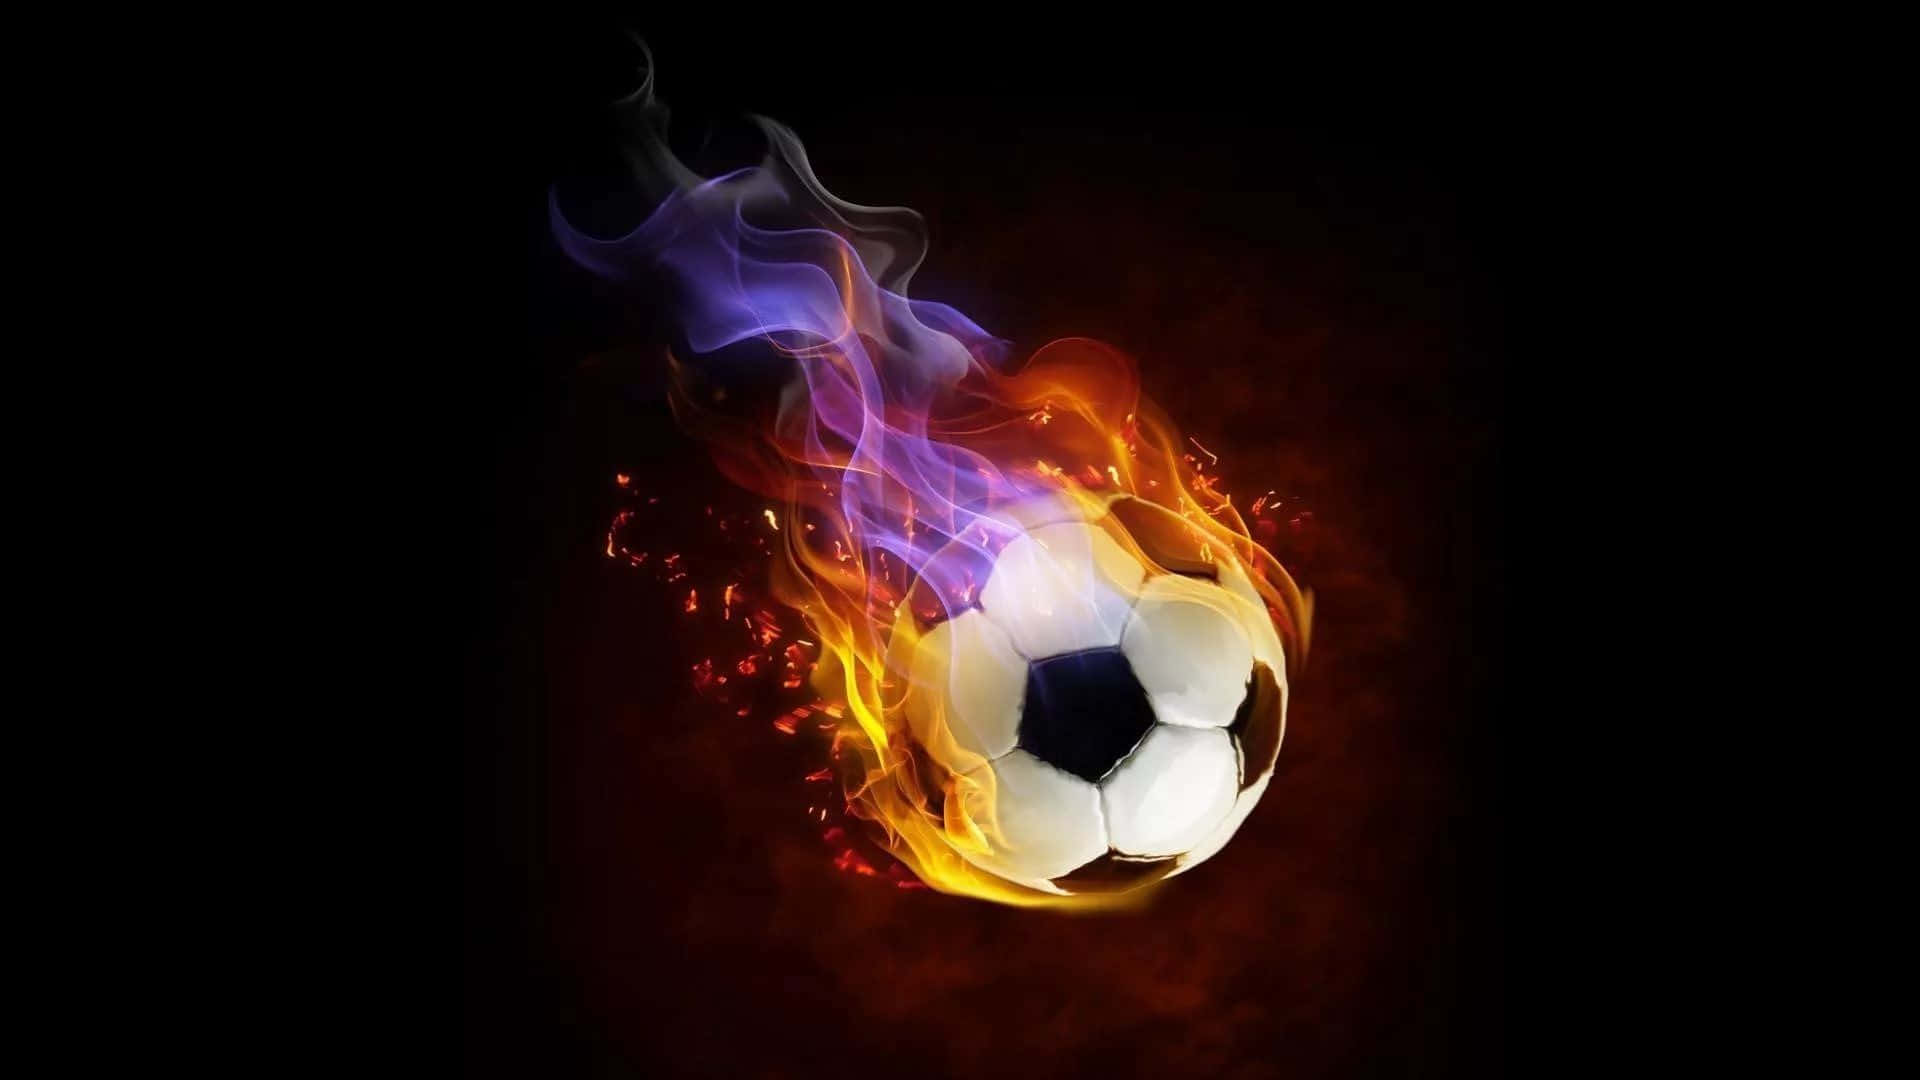 Soccer Ball Background Downwards Flames